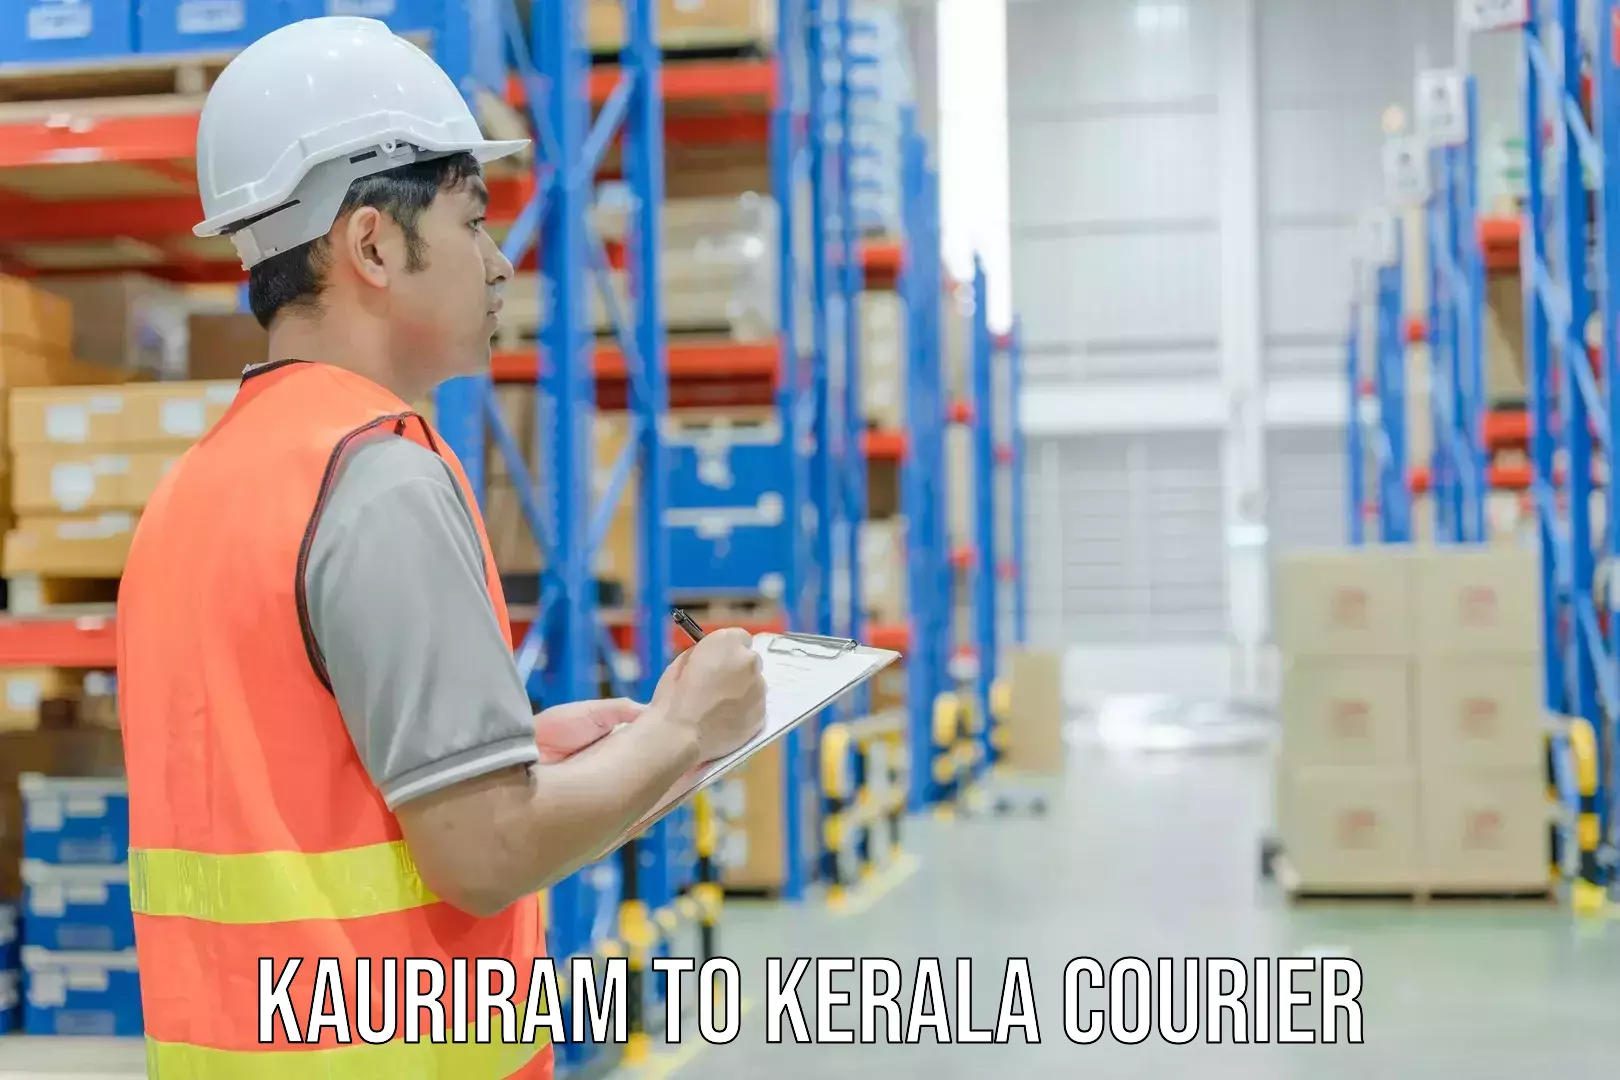 Courier service partnerships Kauriram to Manthuka